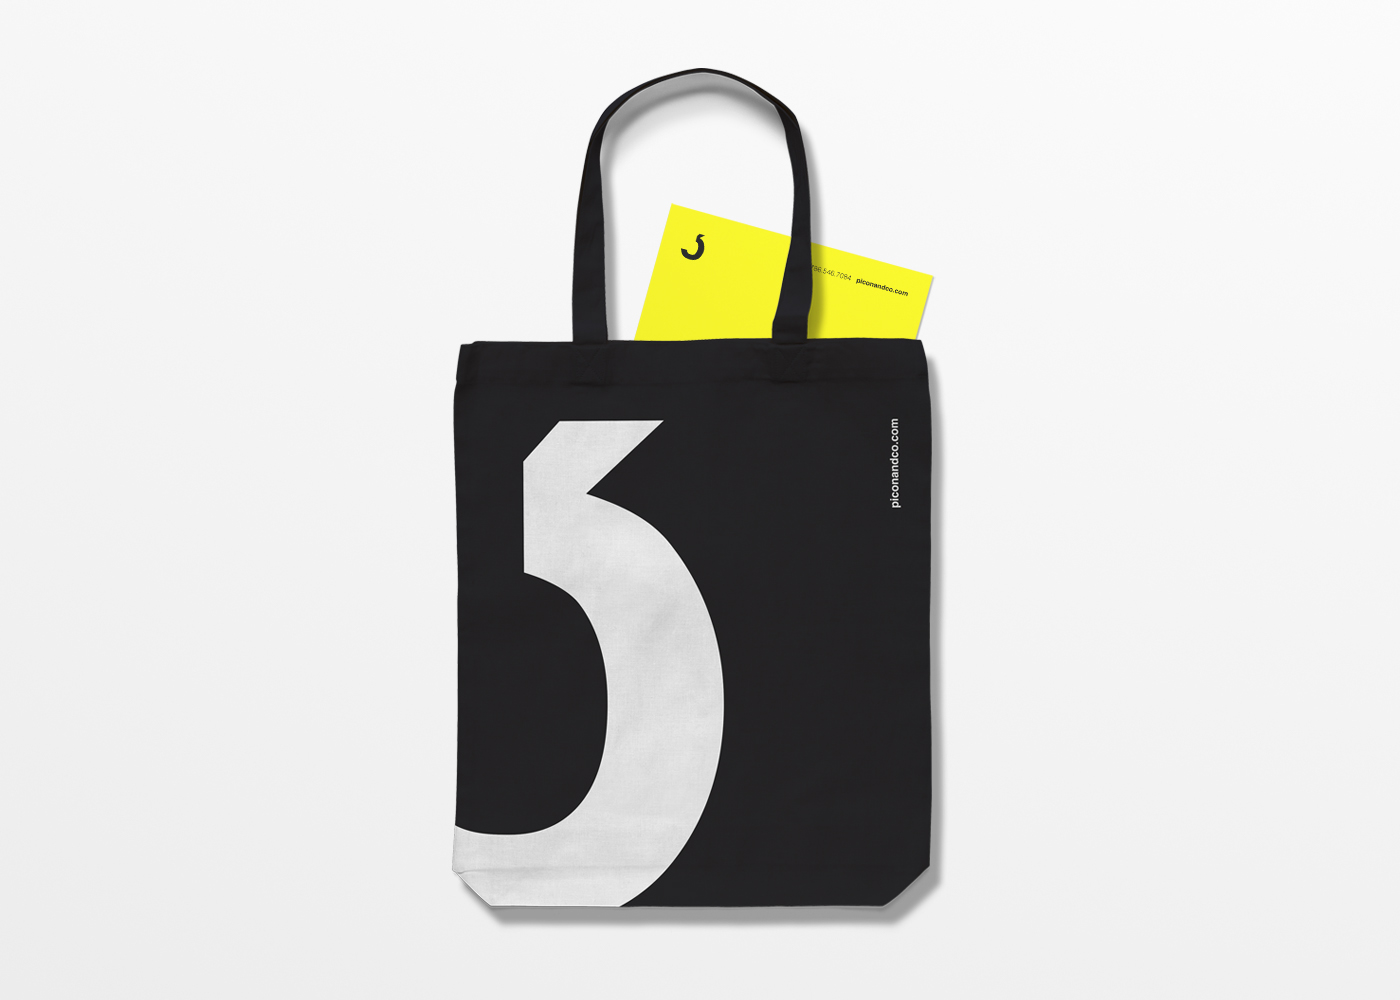 Adobe Portfolio maas 4 studio miami Stationery black logo mark picon&co contrast identity brand art design water bags